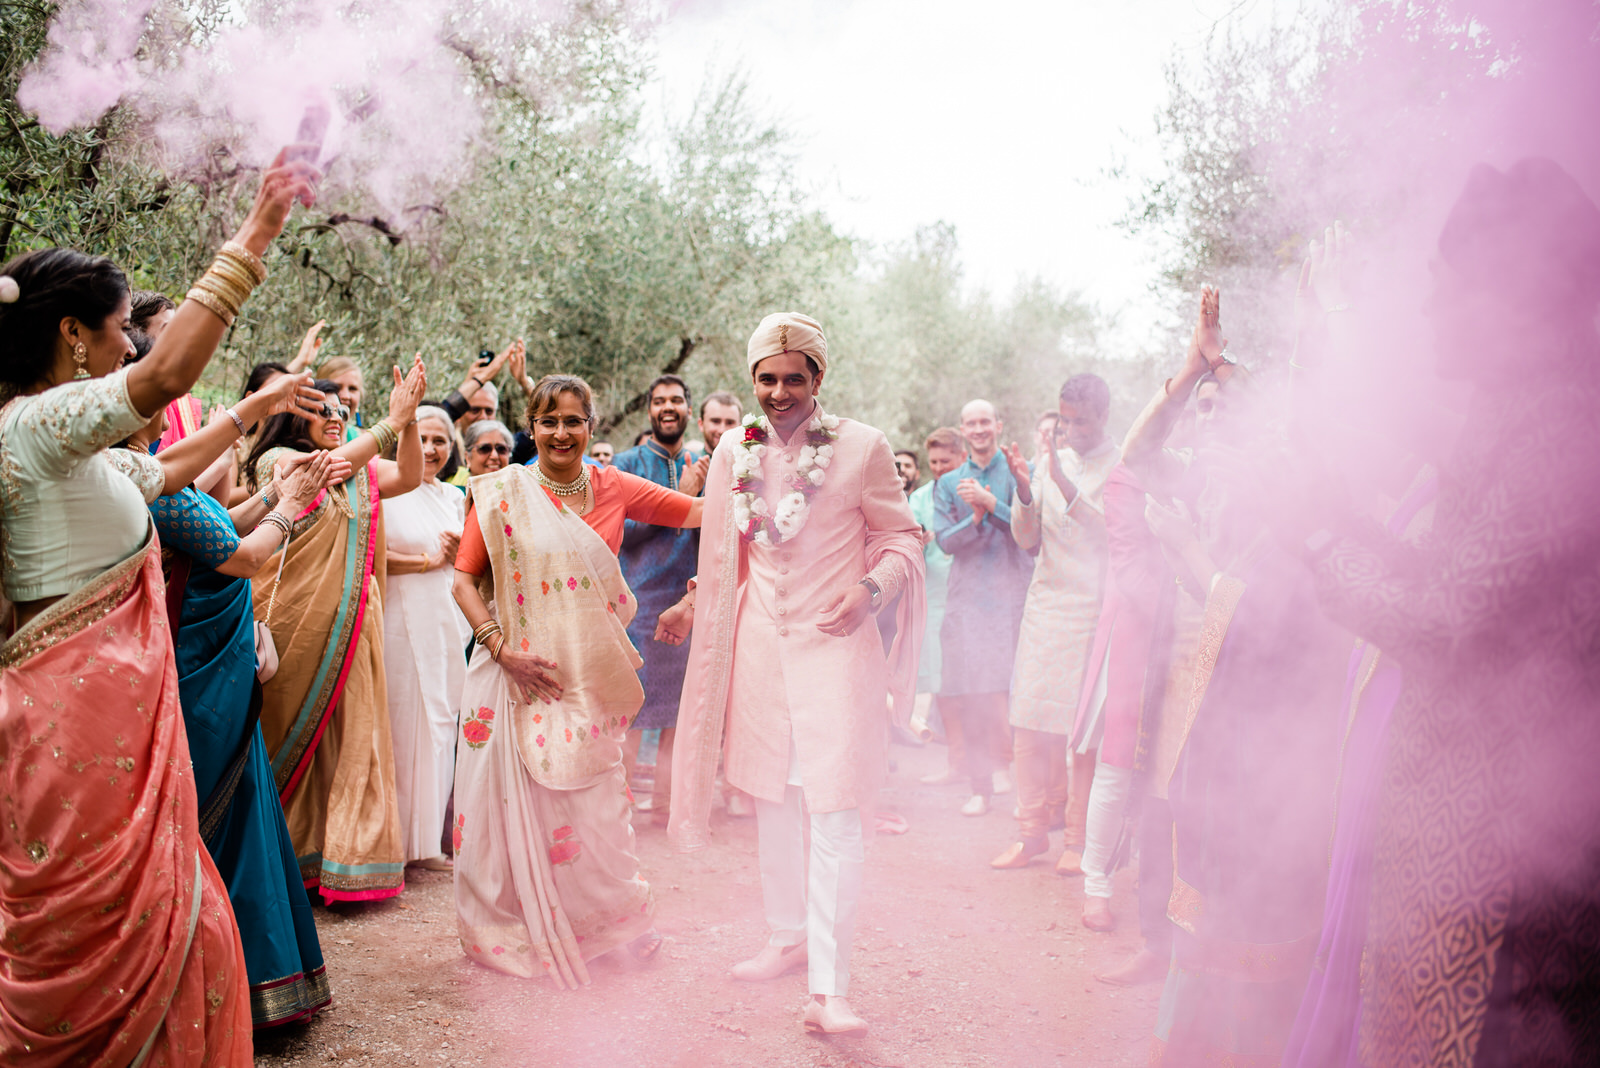 An Indian wedding in a Tuscan villa